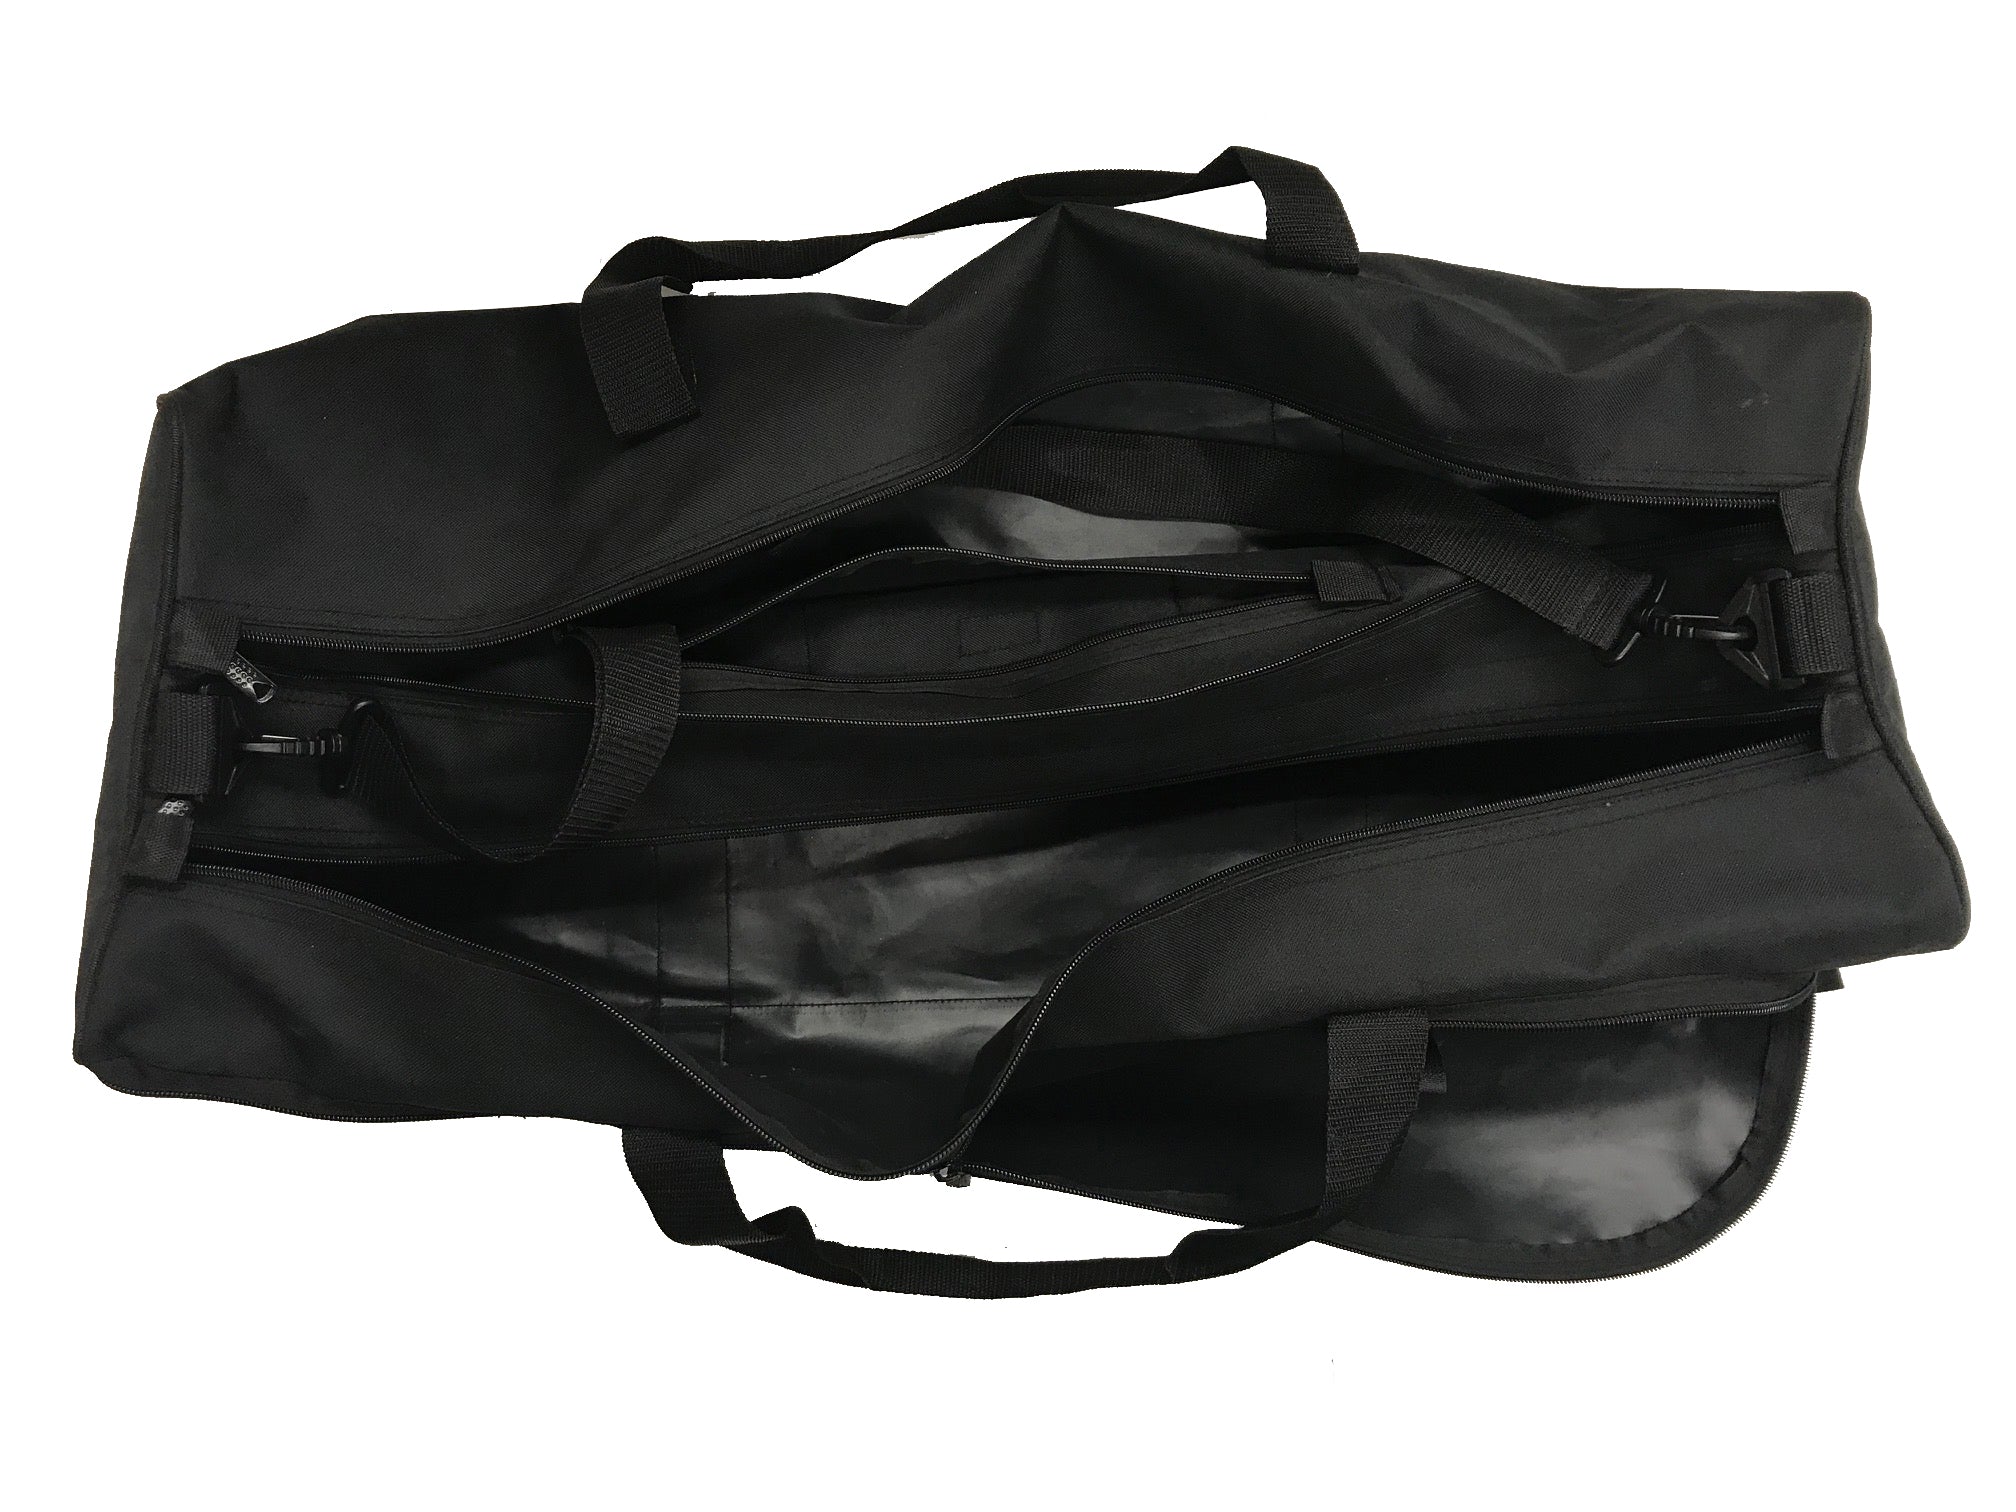 Ronin Gear Ultimate Kali Escrima Arnis FMA Weapons Gear Bag